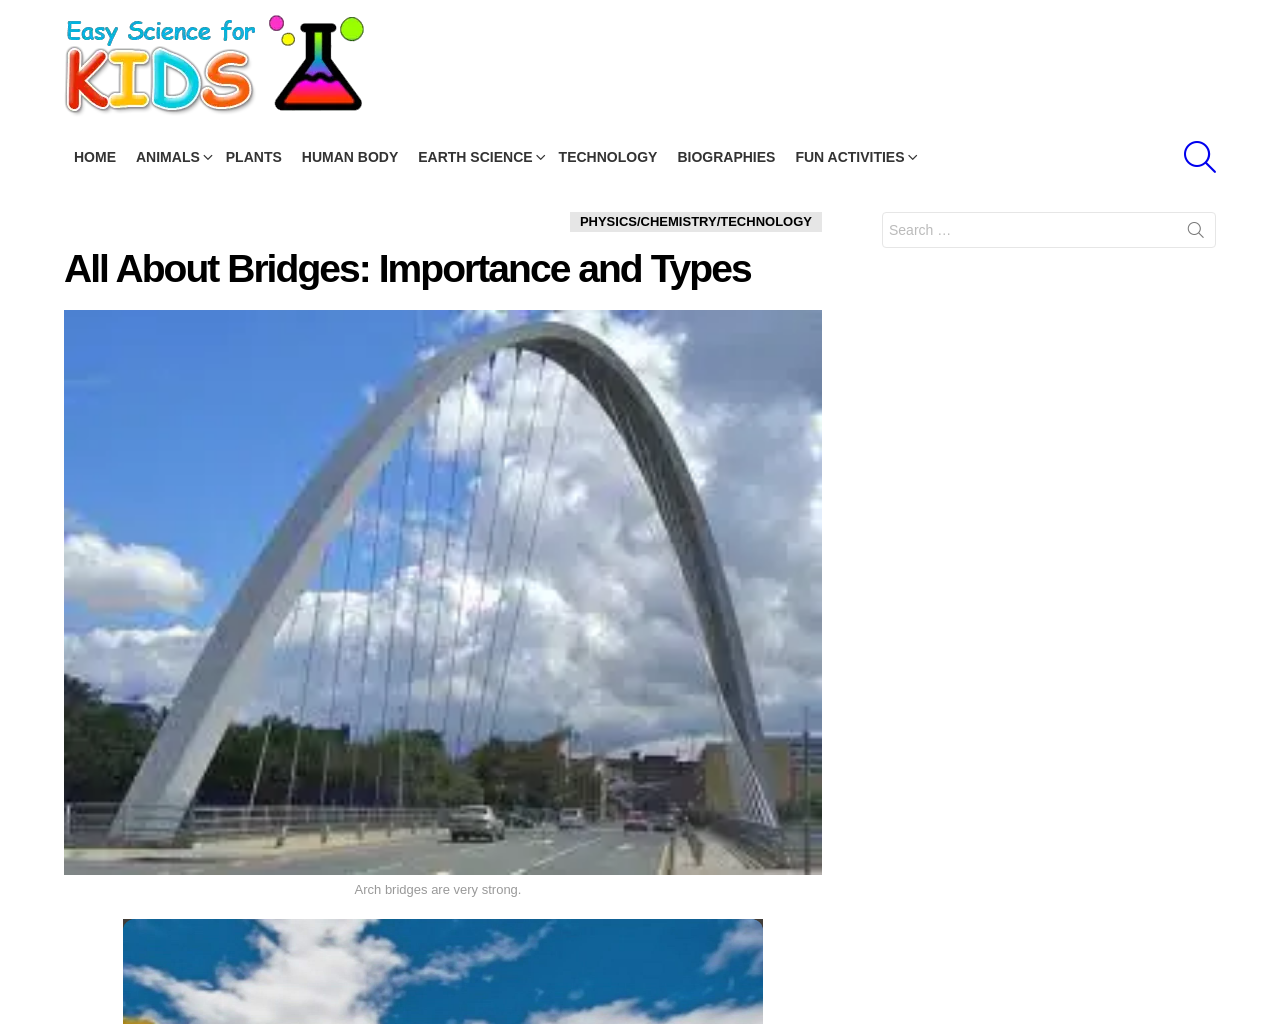 P6 Learning about Bridges